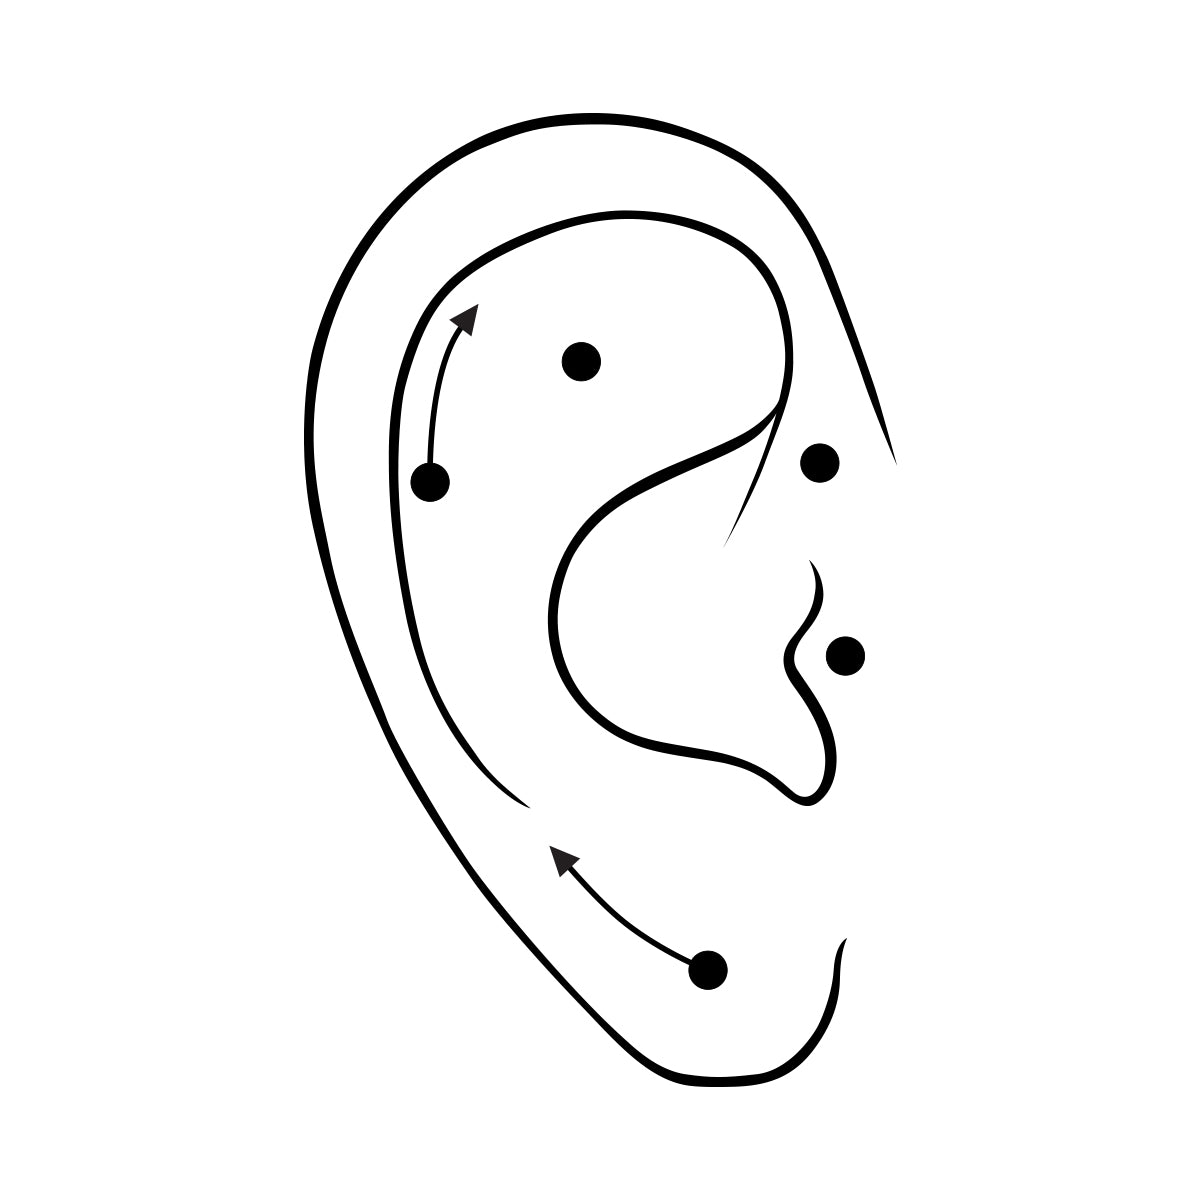 Piercing d’oreille mini design